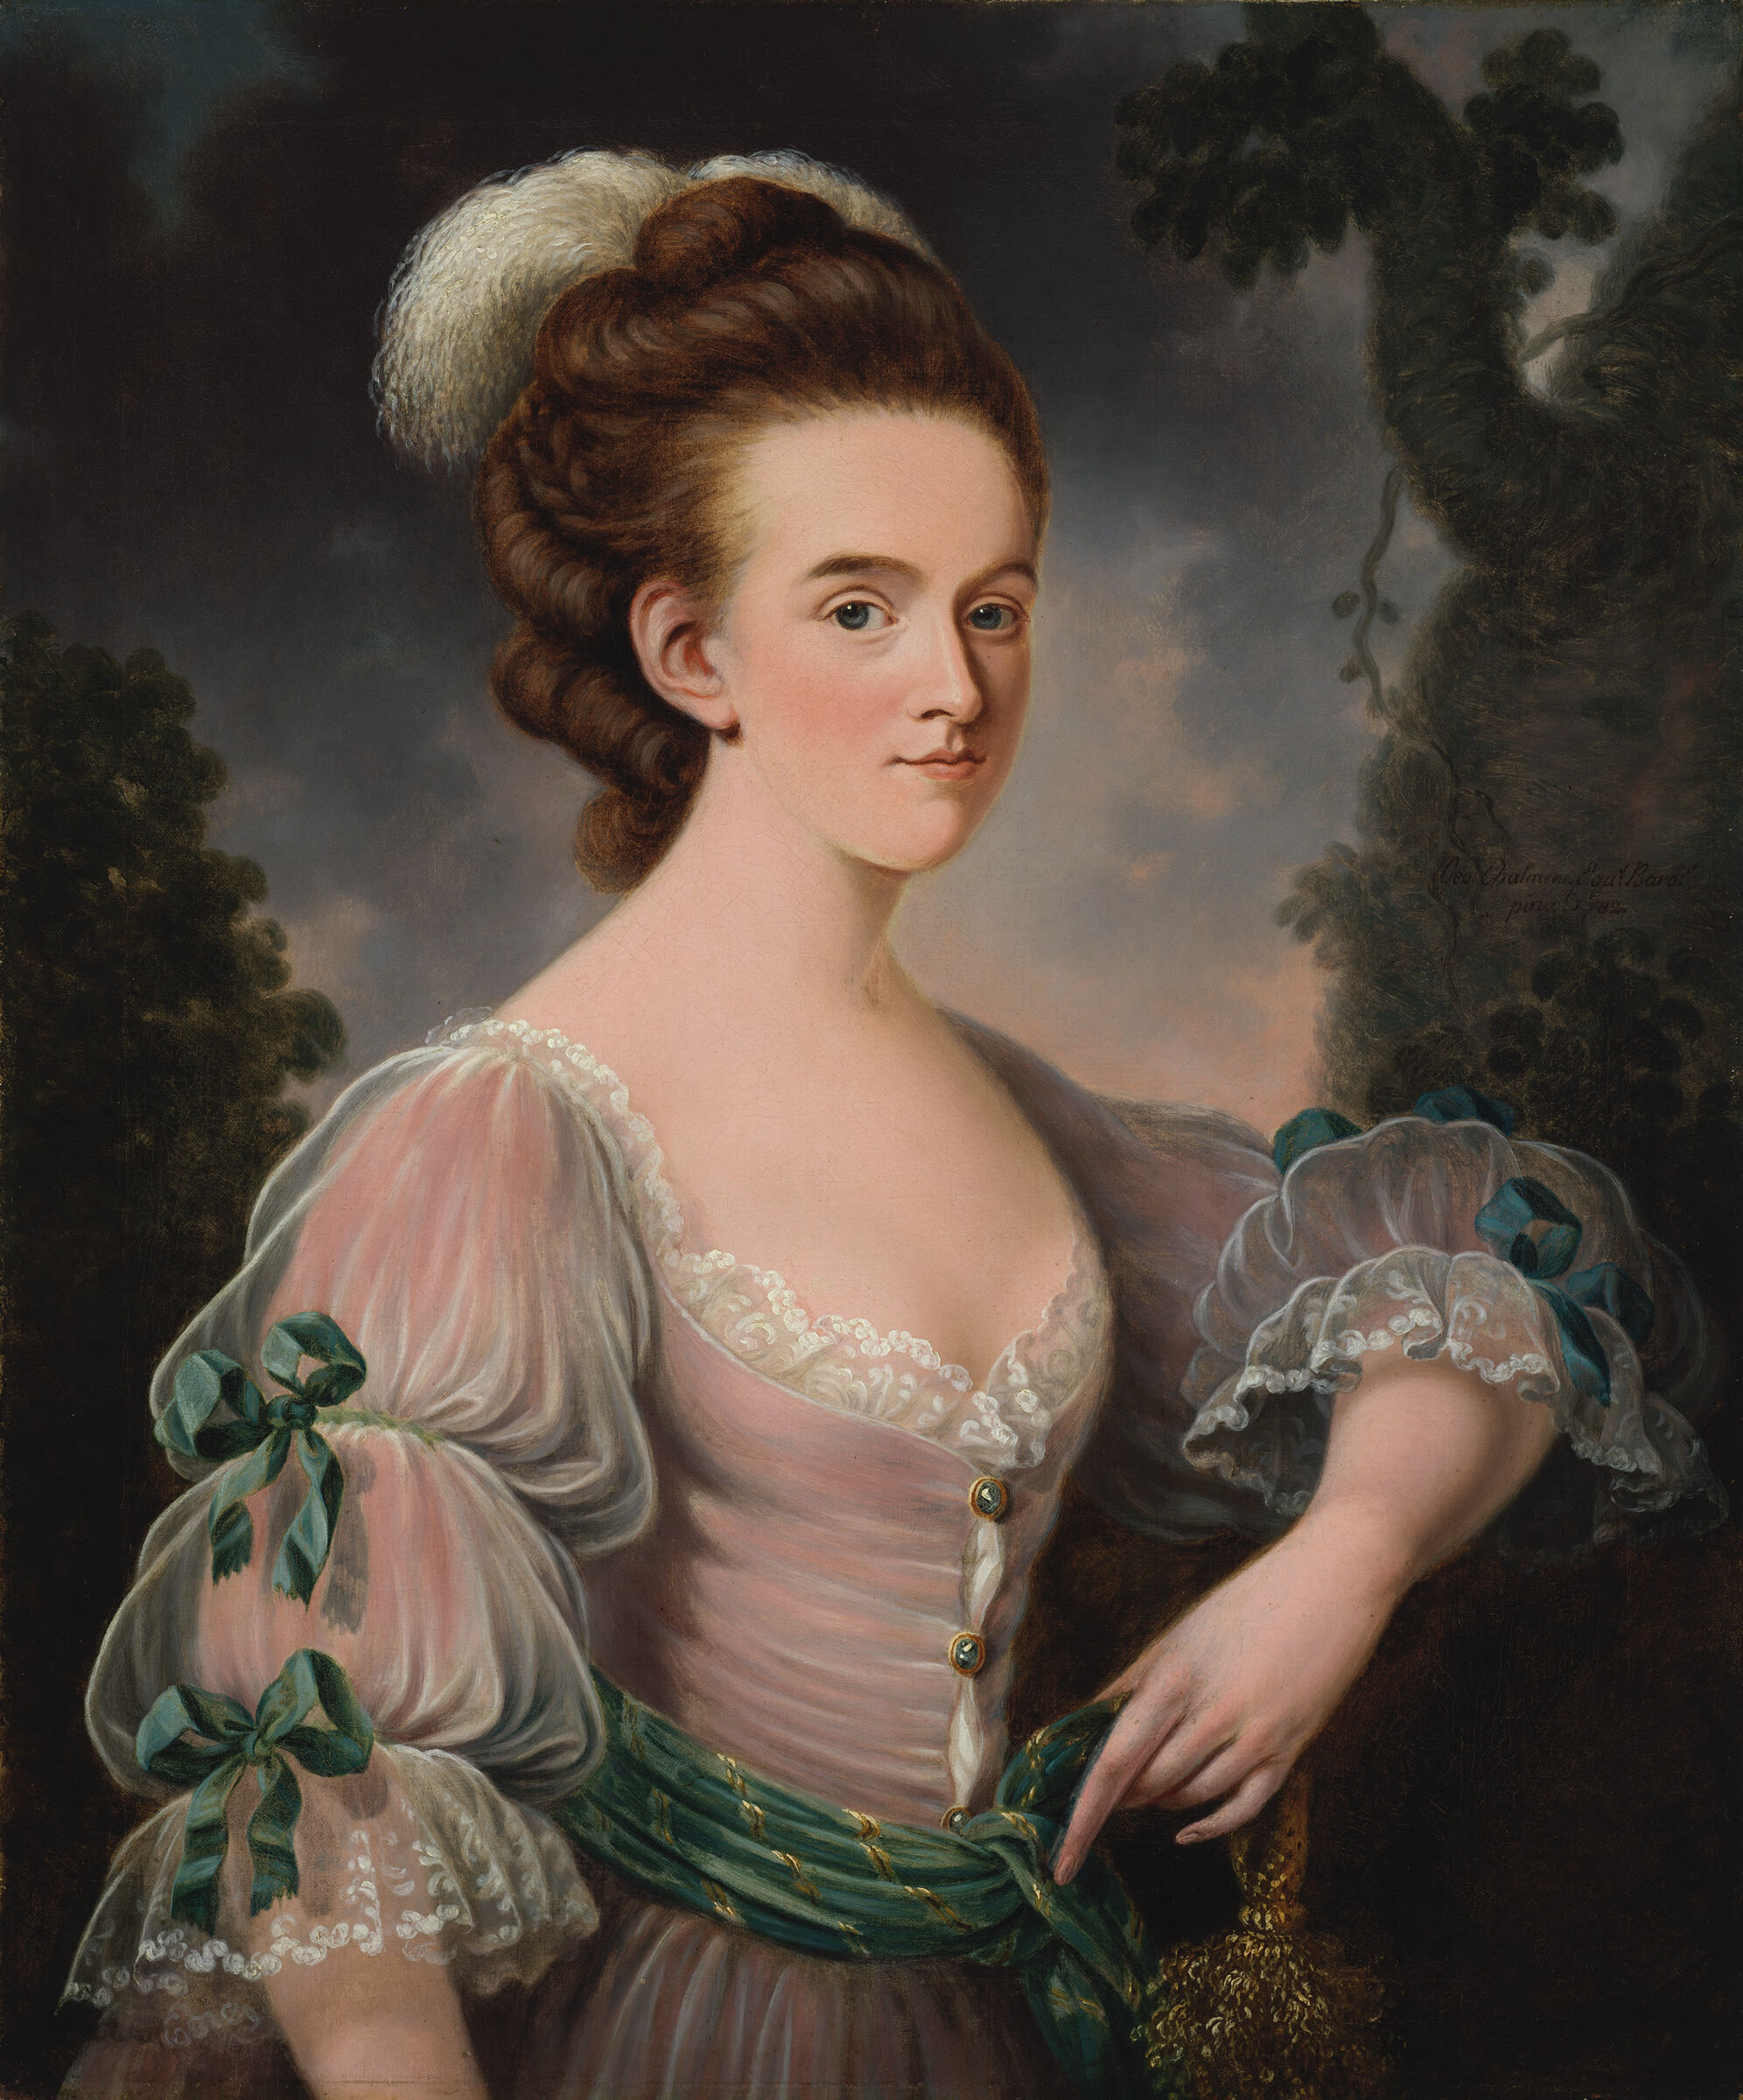 Susannah Inman Linzee (Mrs. John Linzee) (1745-1792)